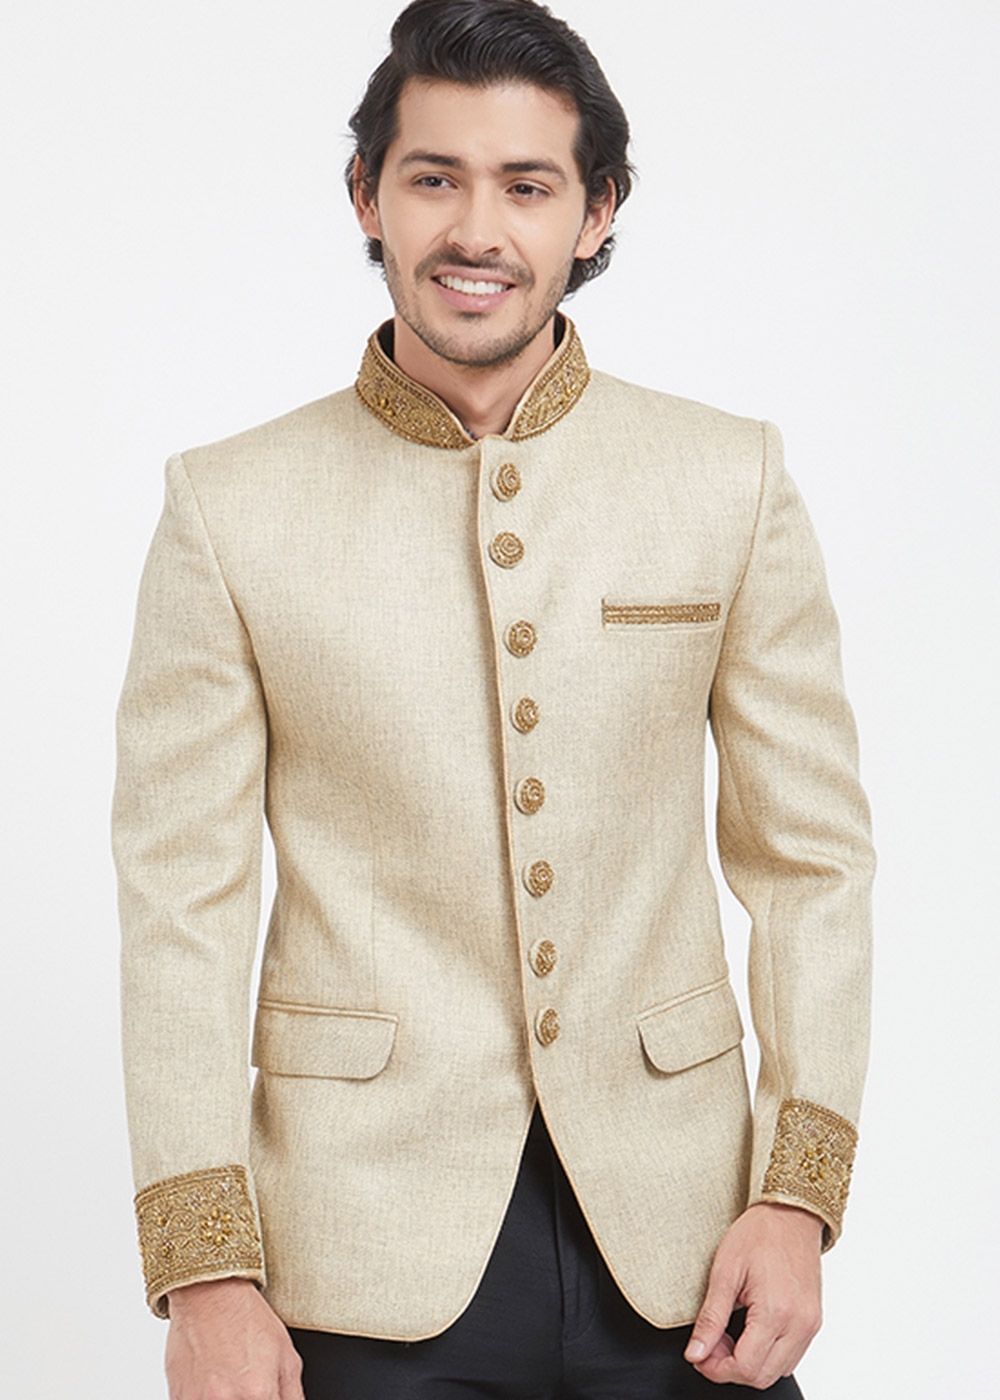 Fawn Jodhpuri suit for Men Wedding | Indian wedding suits men, Men stylish  dress, Suit for men wedding